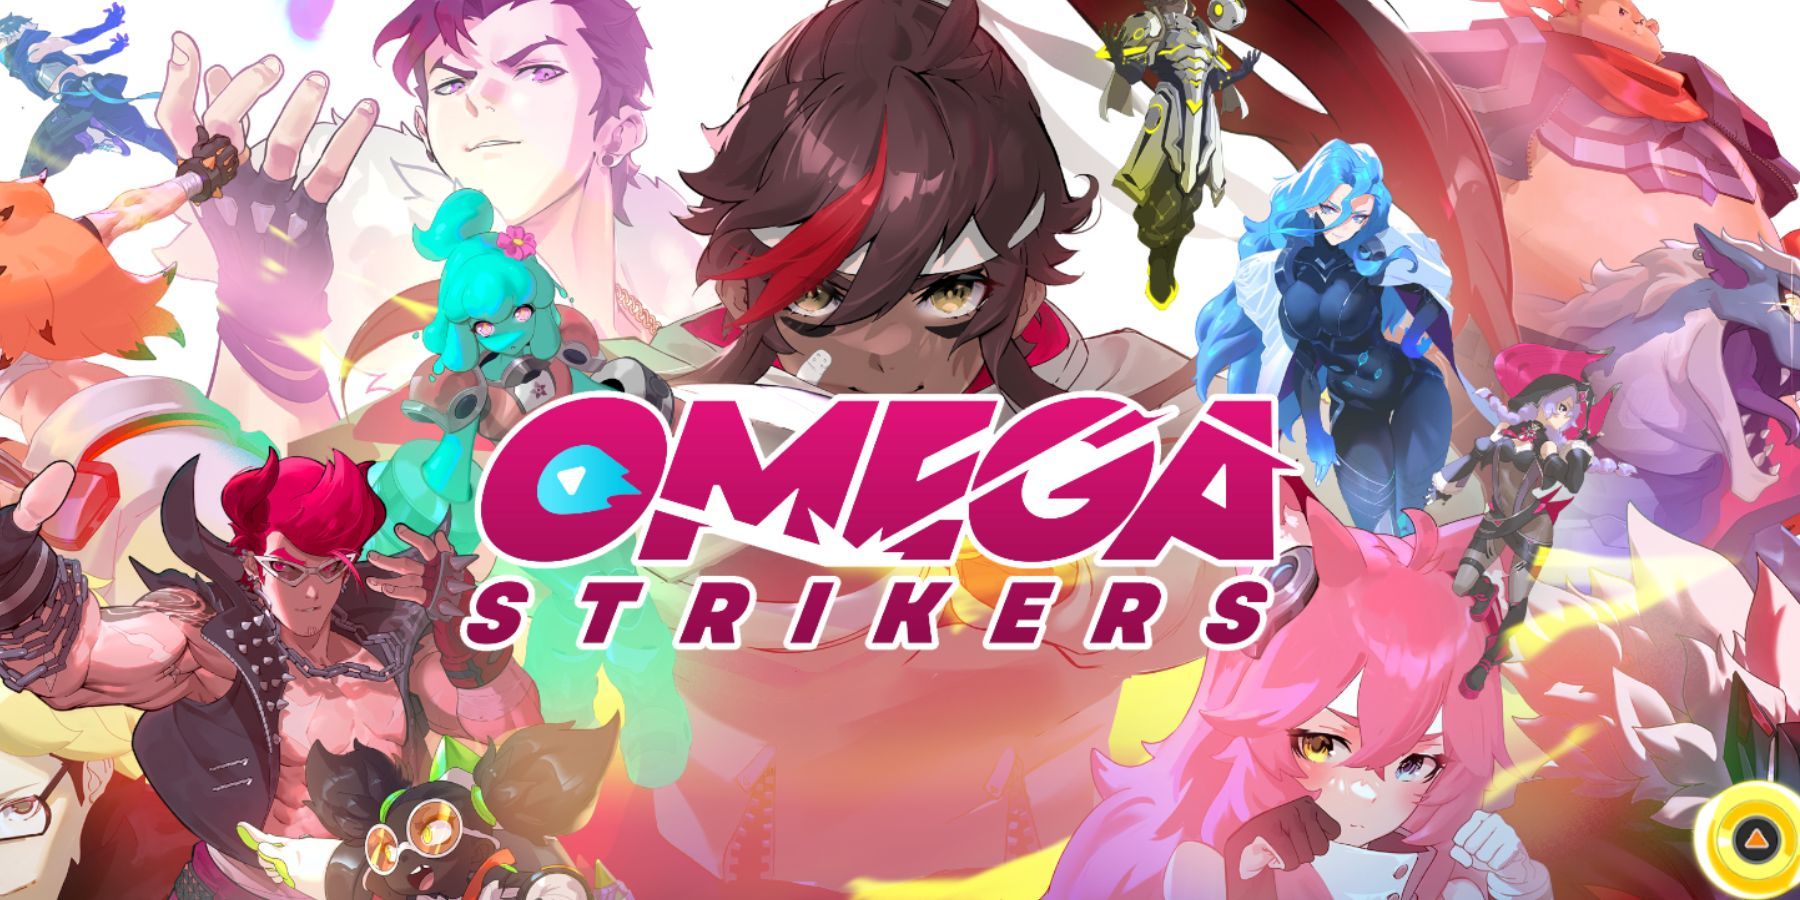 Omega Strikers Codes